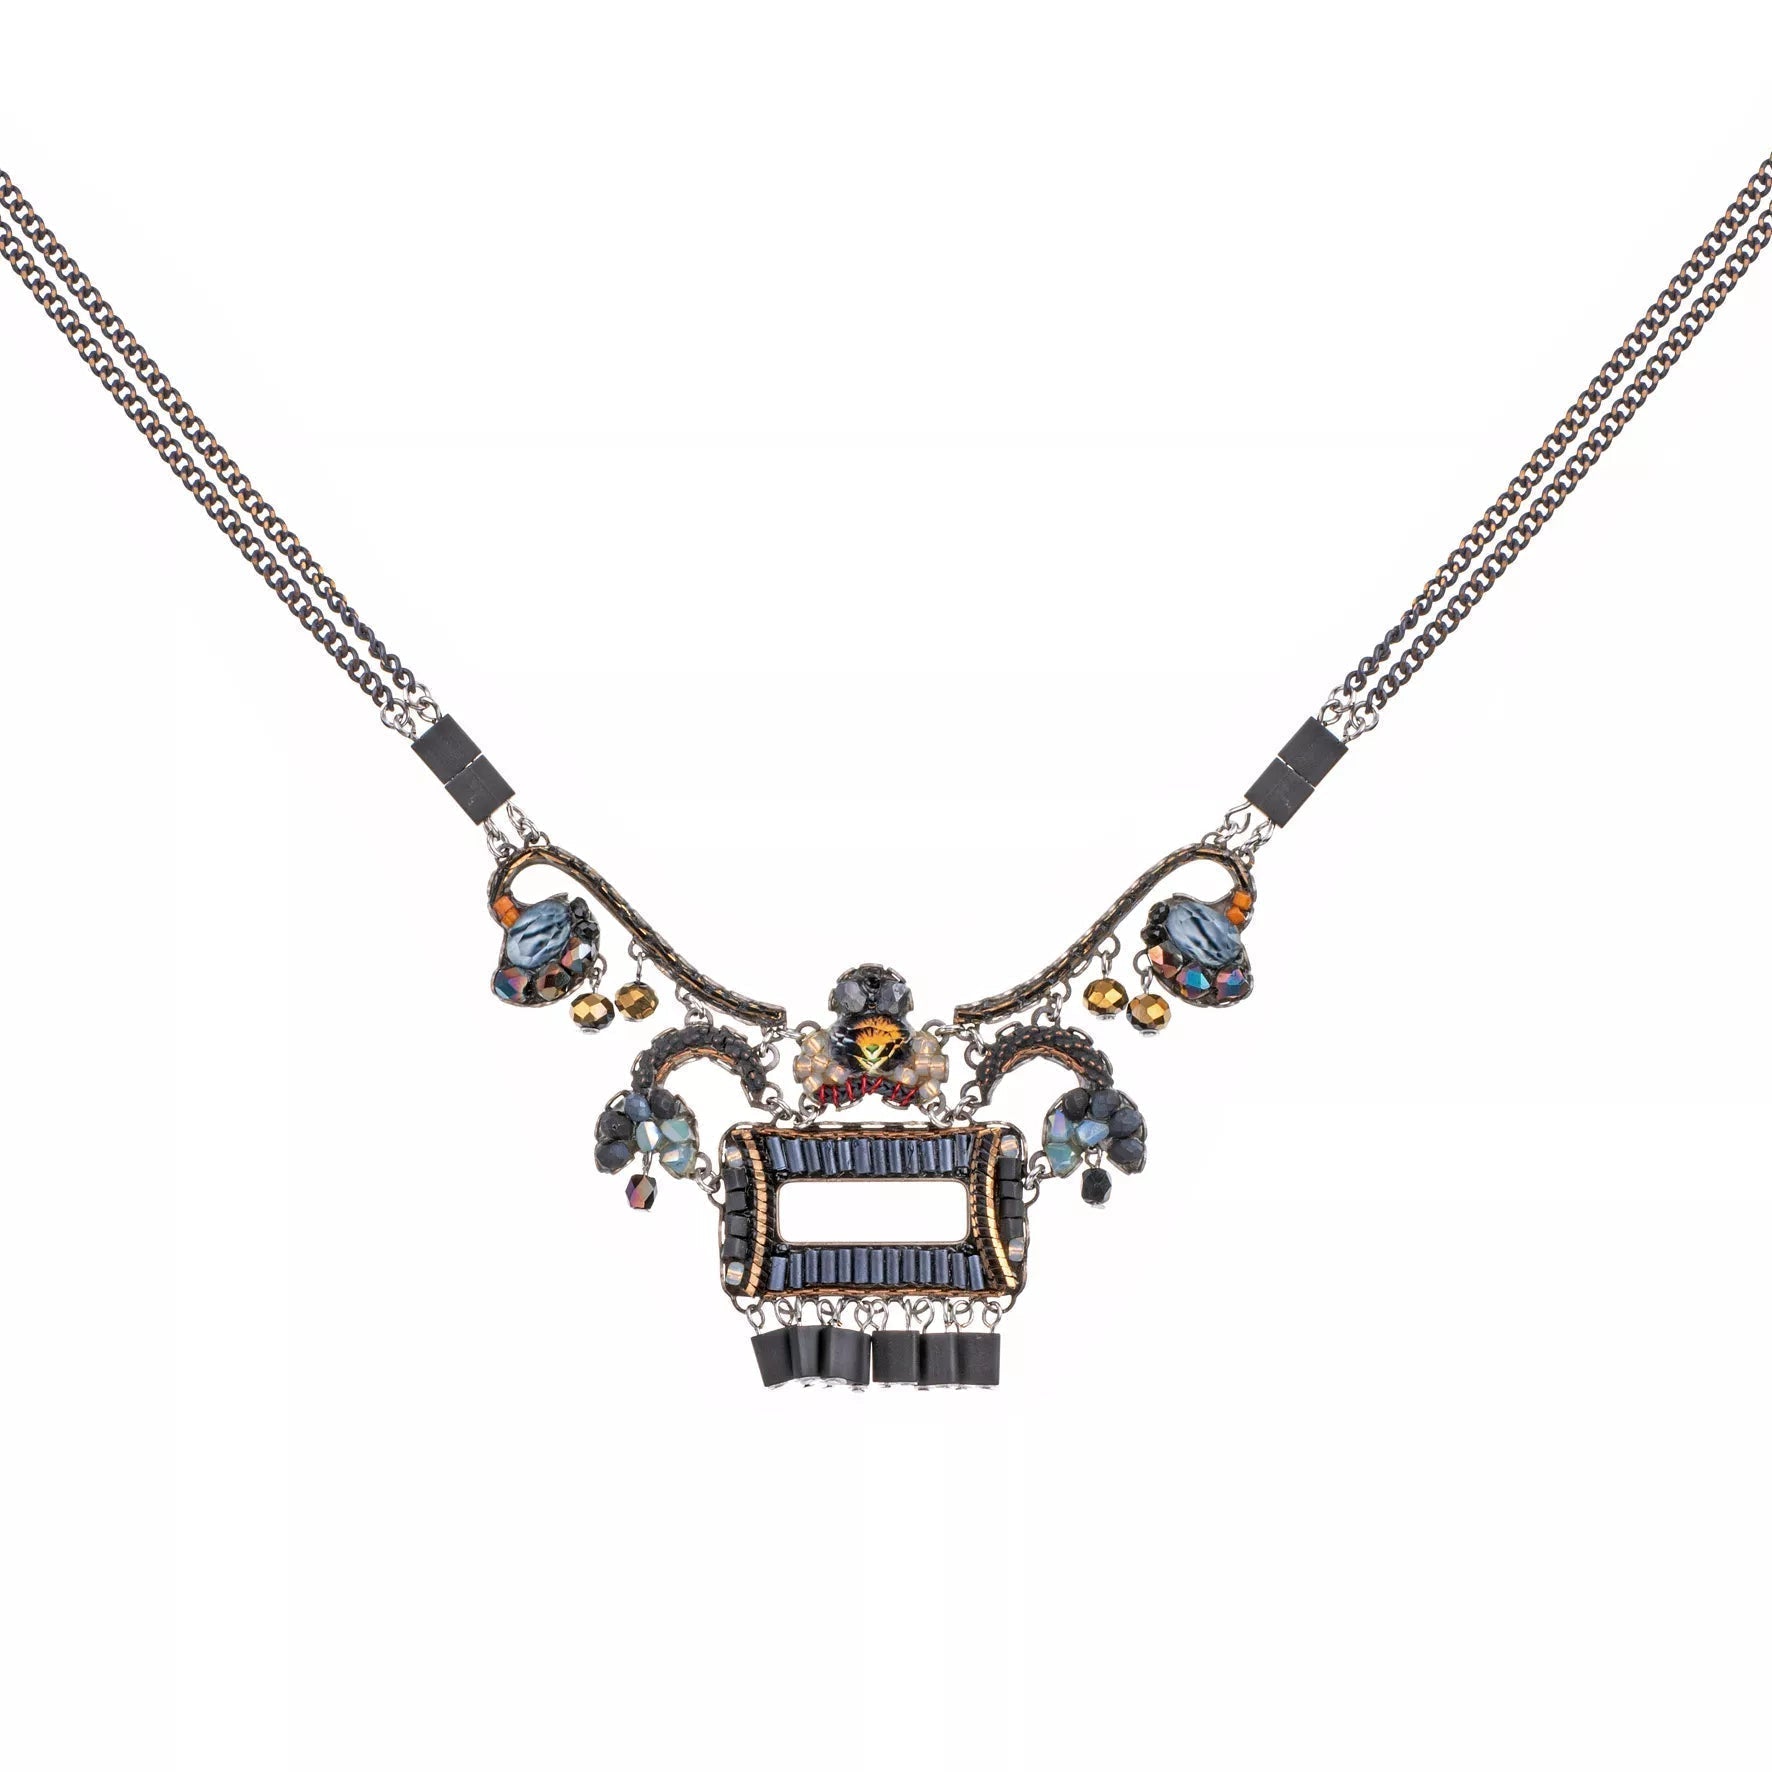 Black Forest Necklace - The Nancy Smillie Shop - Art, Jewellery & Designer Gifts Glasgow